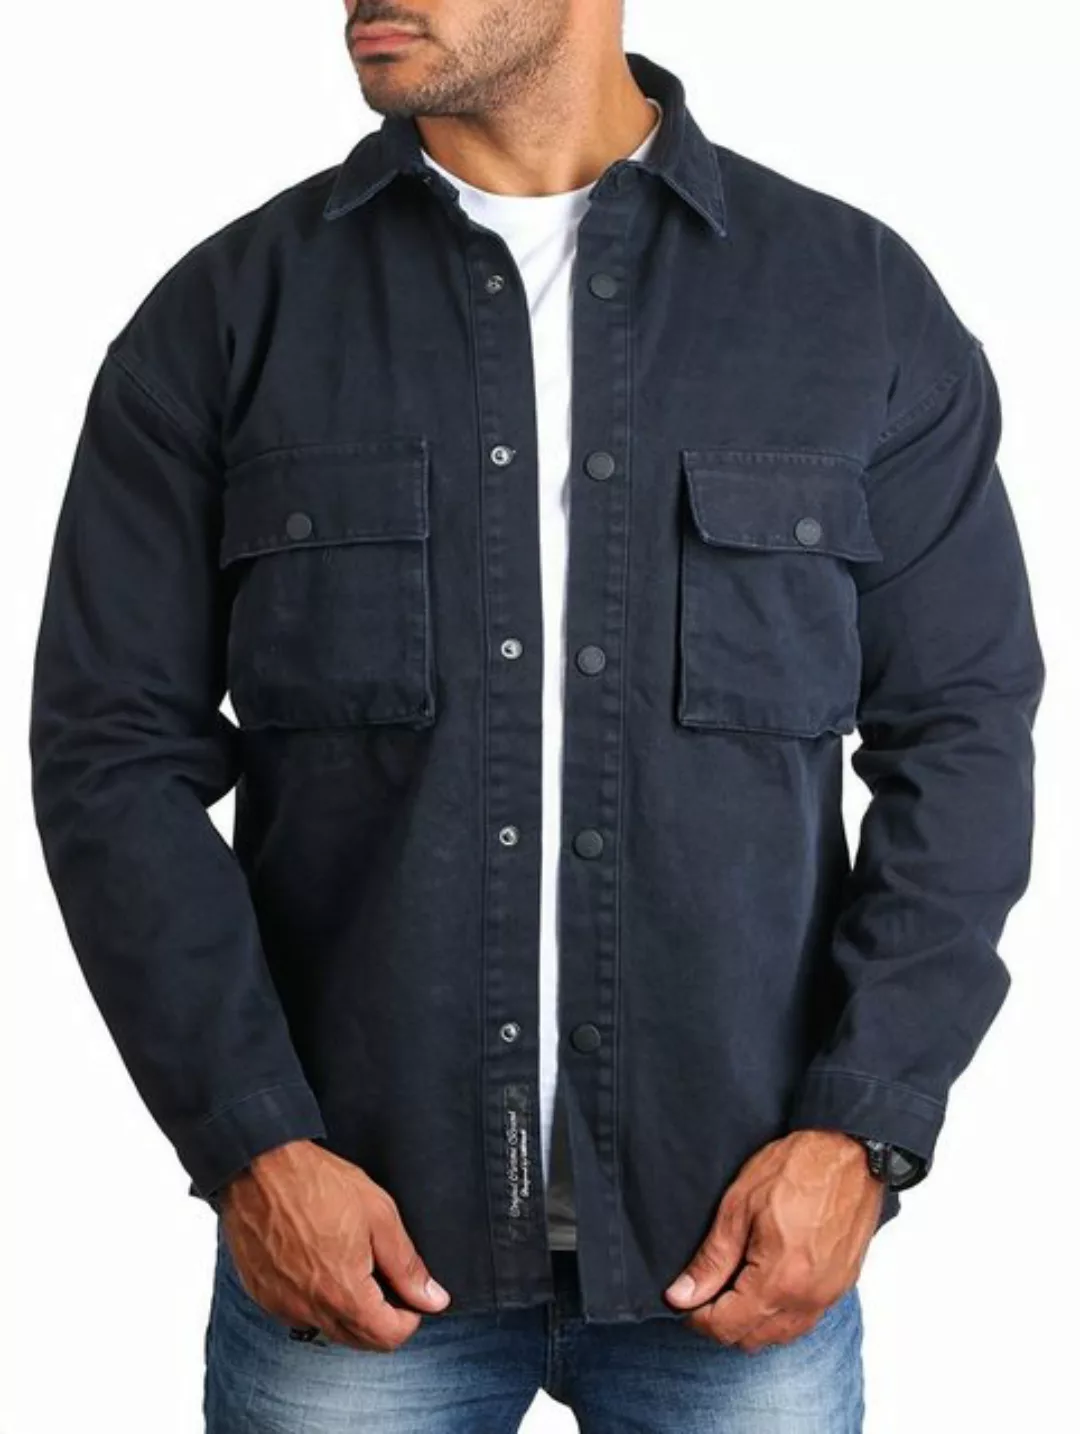 CARISMA Langarmhemd Herren Hemd Jacke robuste jeansartige Qualität retro Sa günstig online kaufen